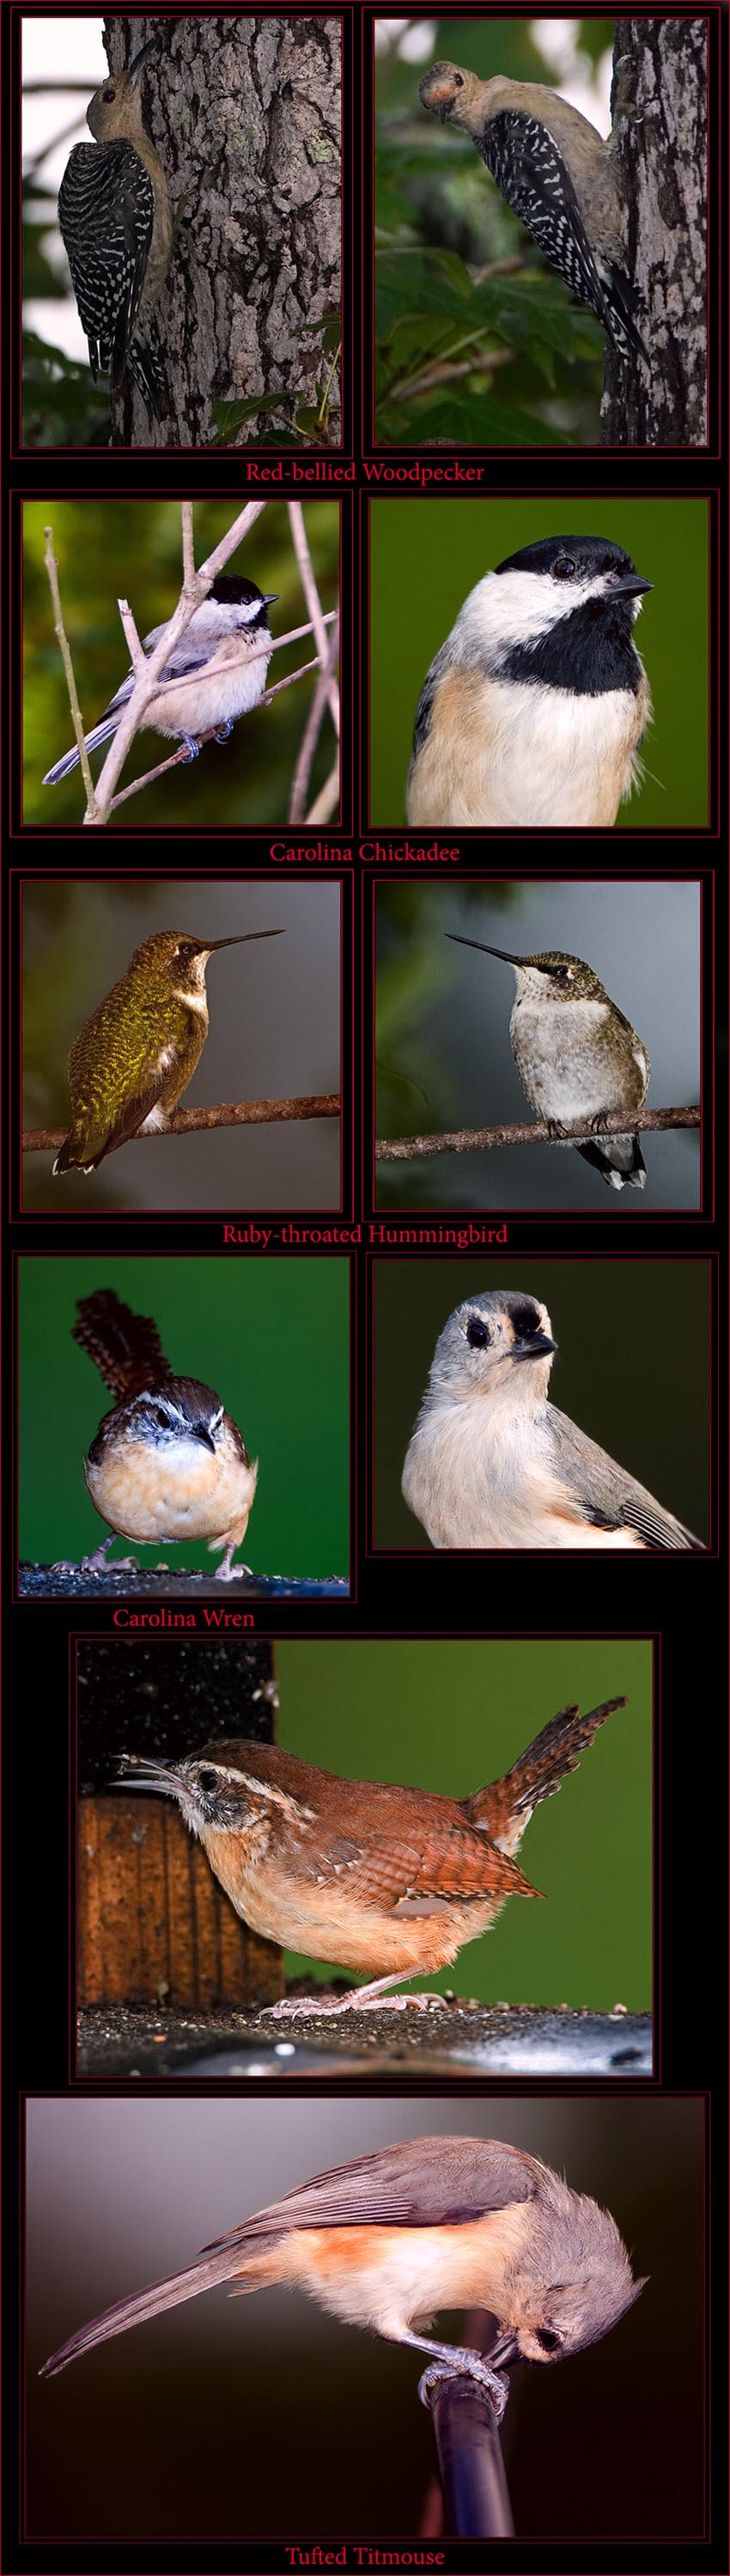 Skidaway Island Birds